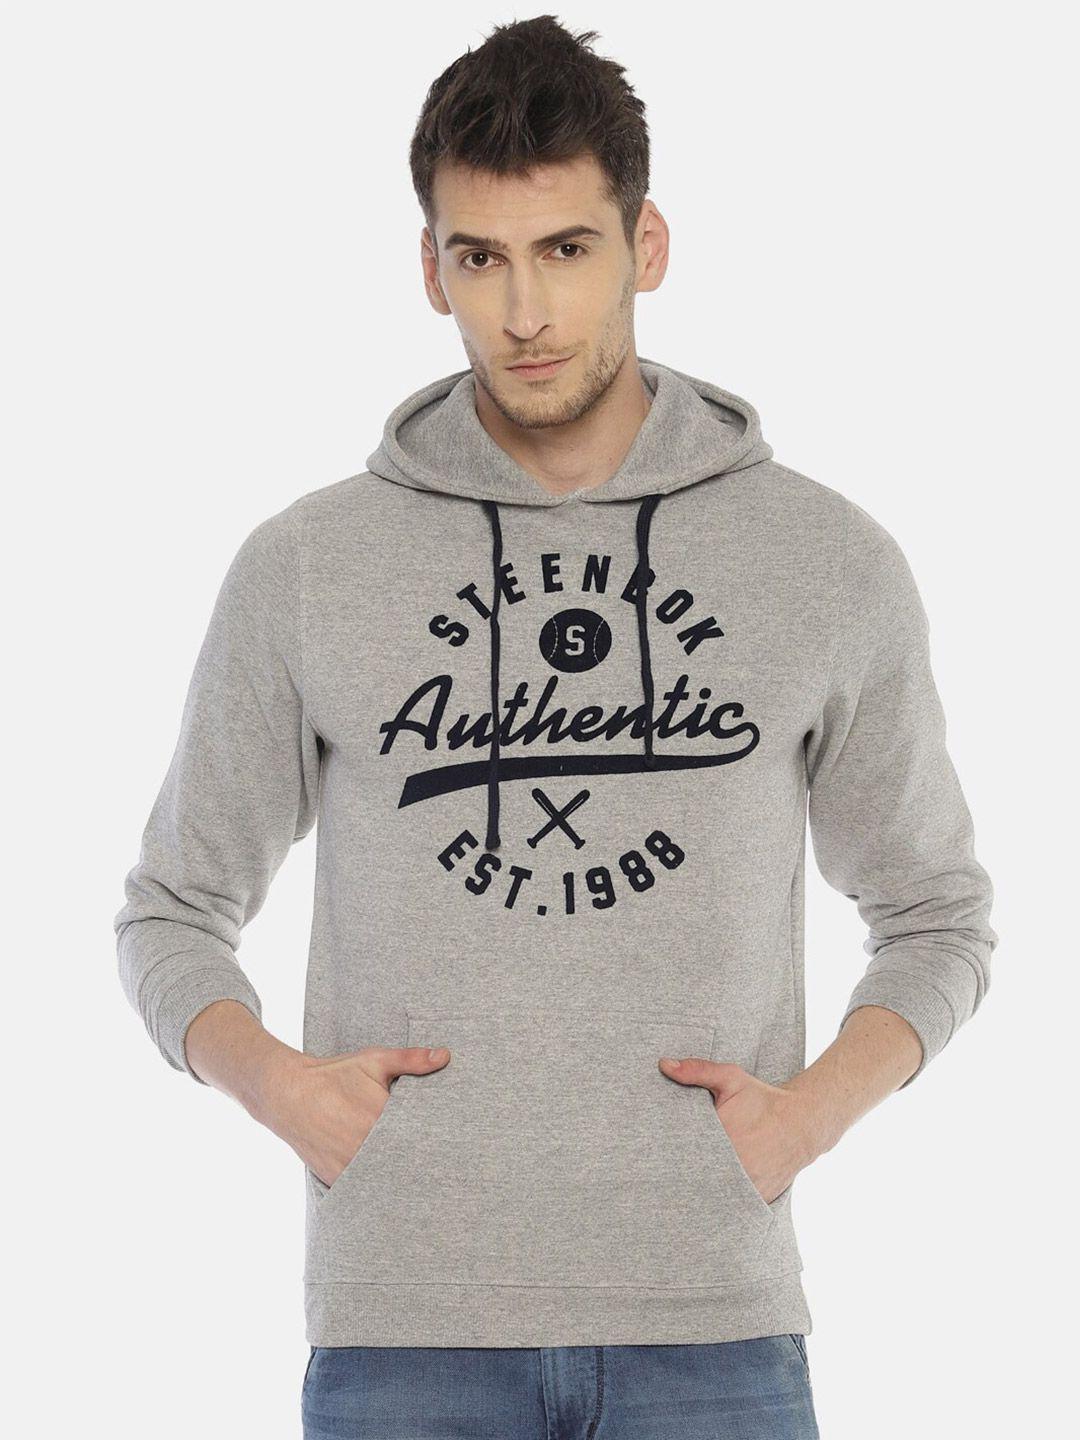 steenbok-typography-printed-hooded-cotton-sweatshirt